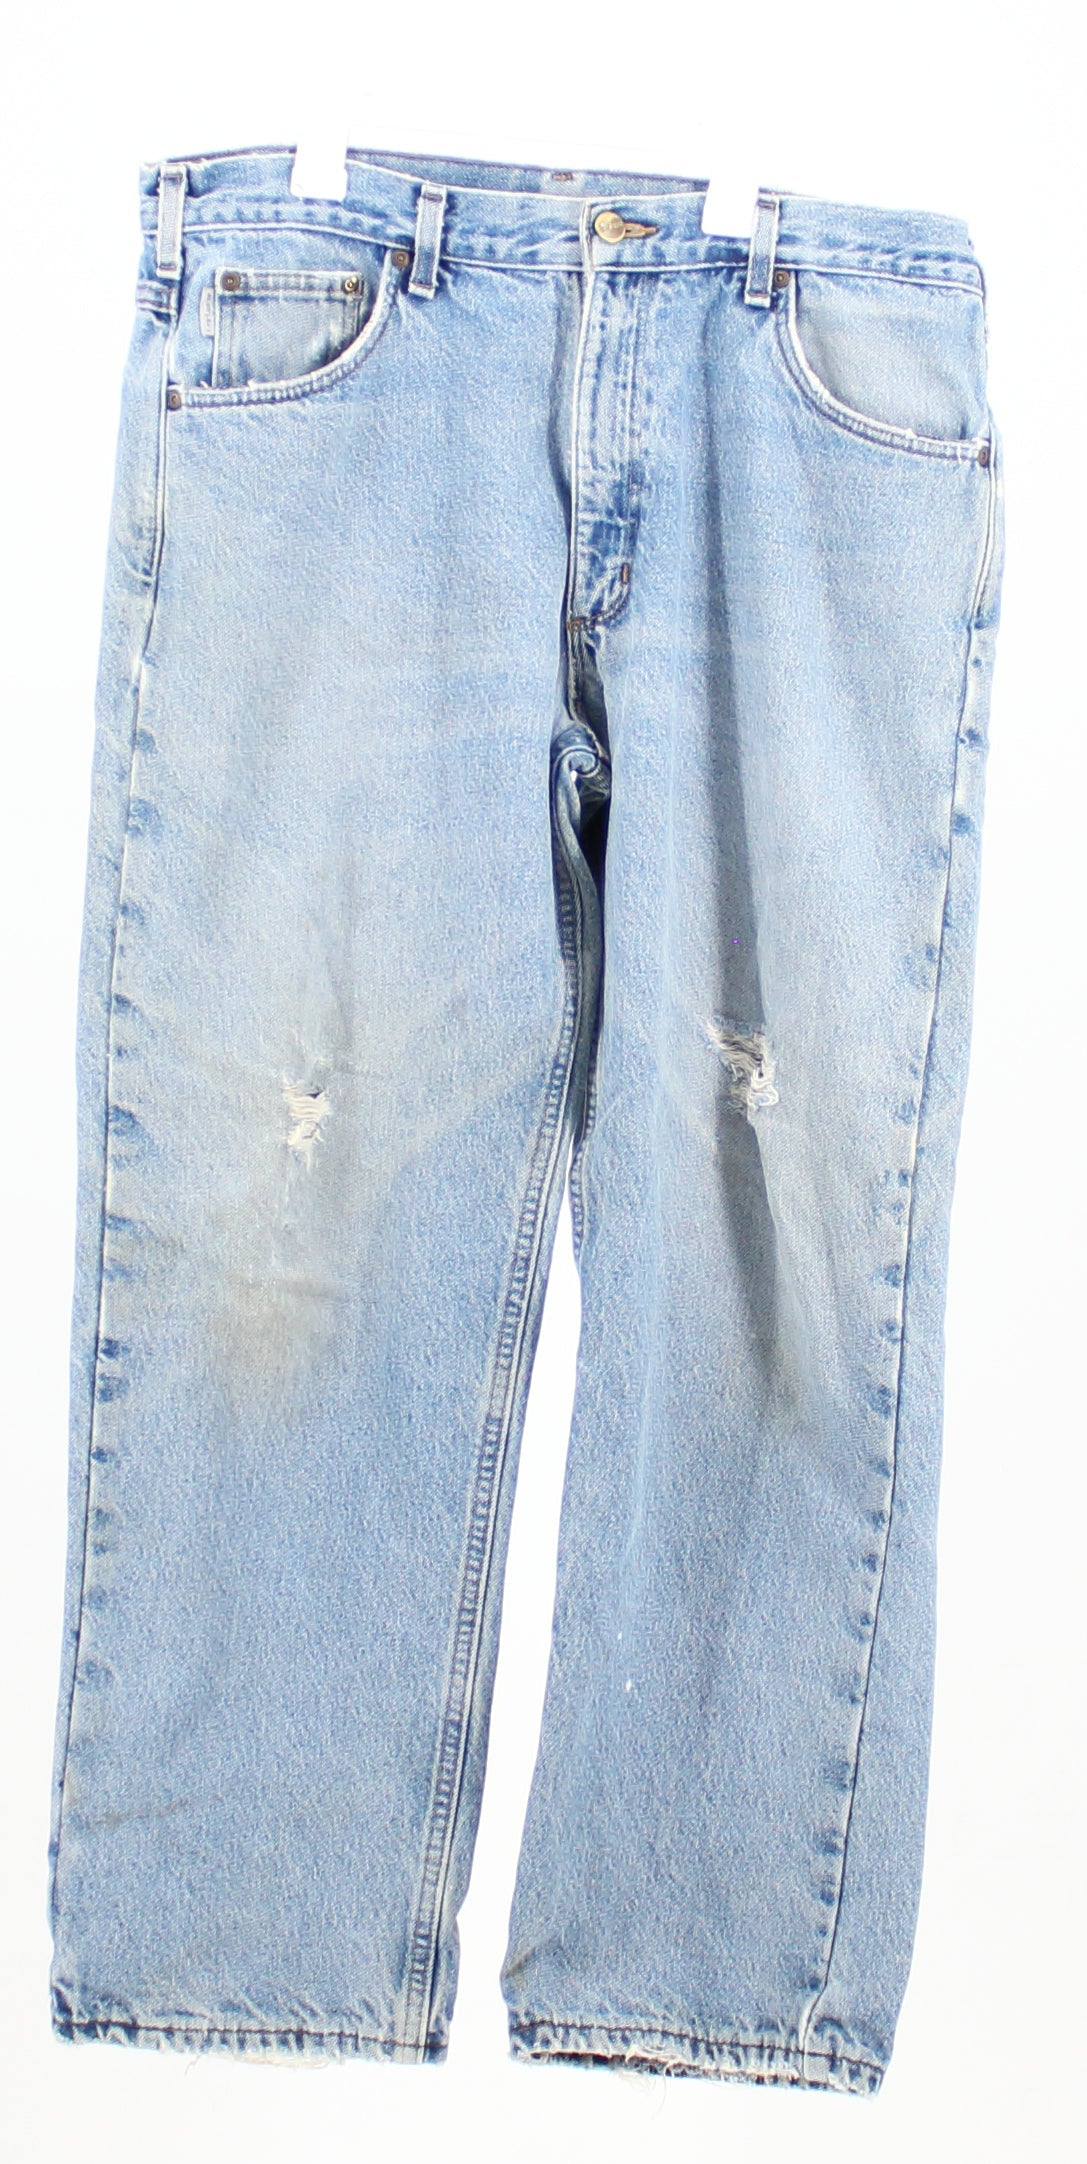 Carhartt Light Washed Distressed Denim Jeans